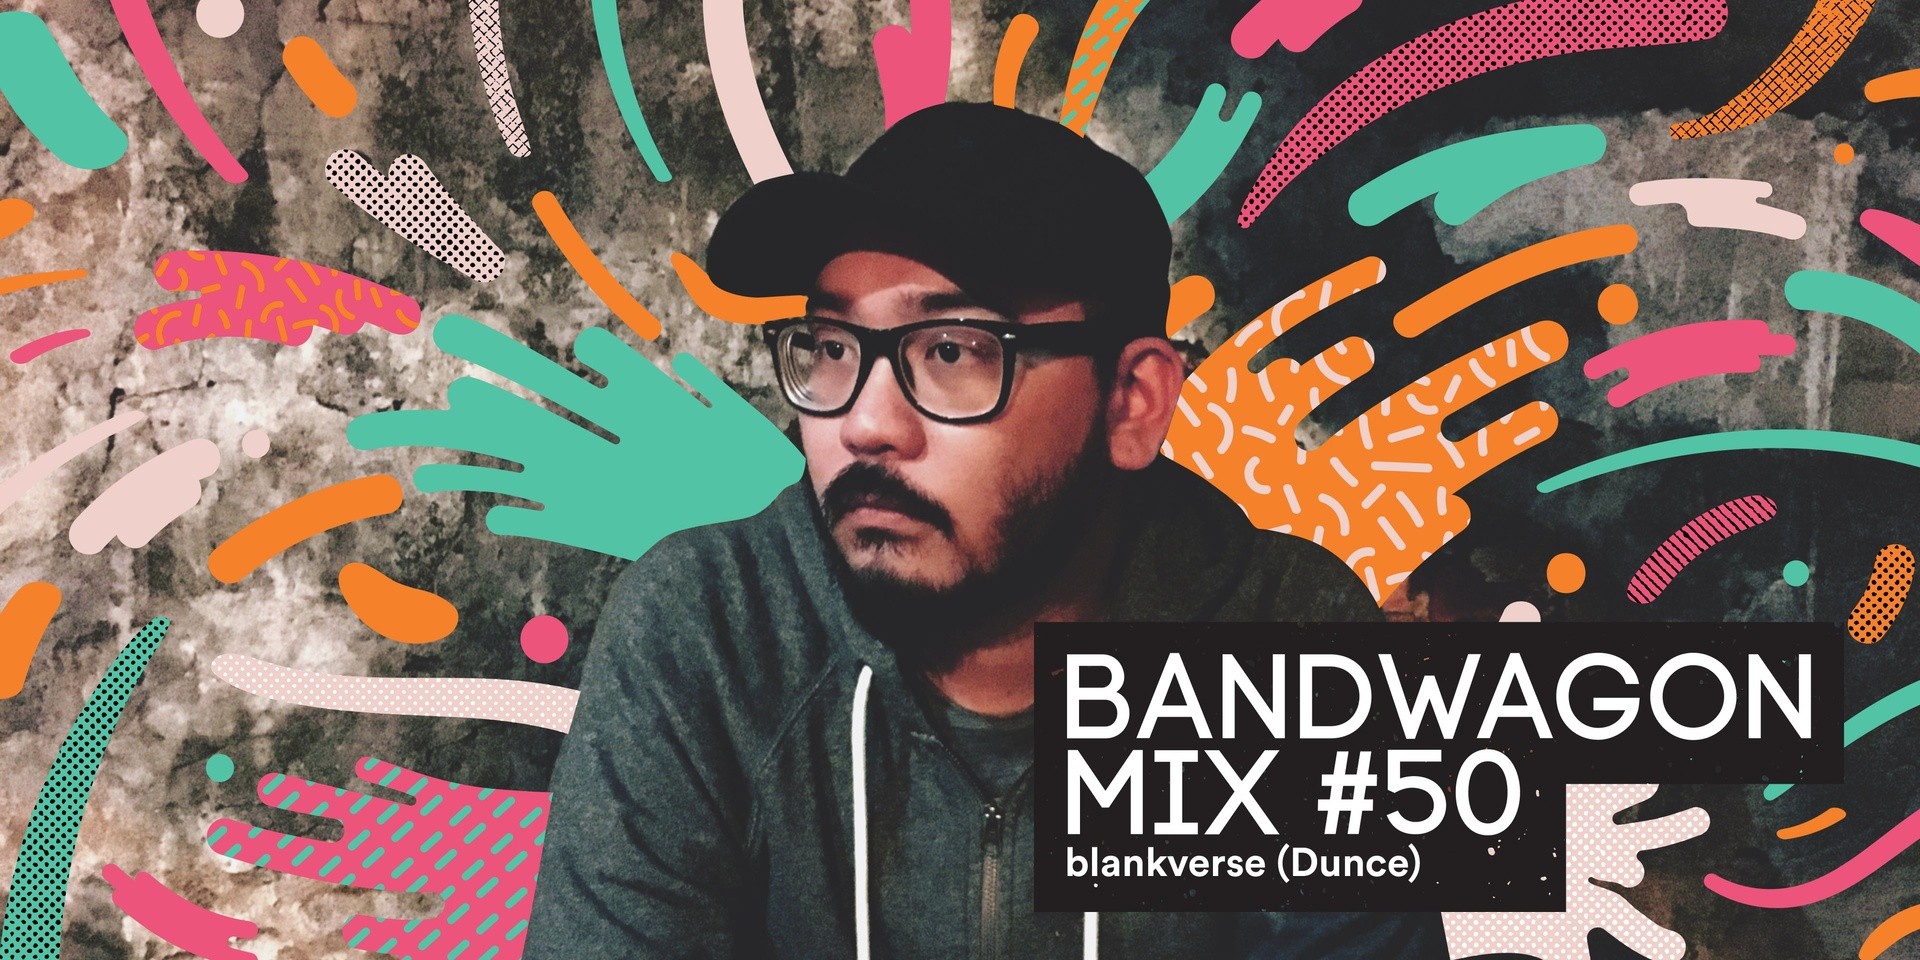 Bandwagon Mix #50: blankverse (Dunce)